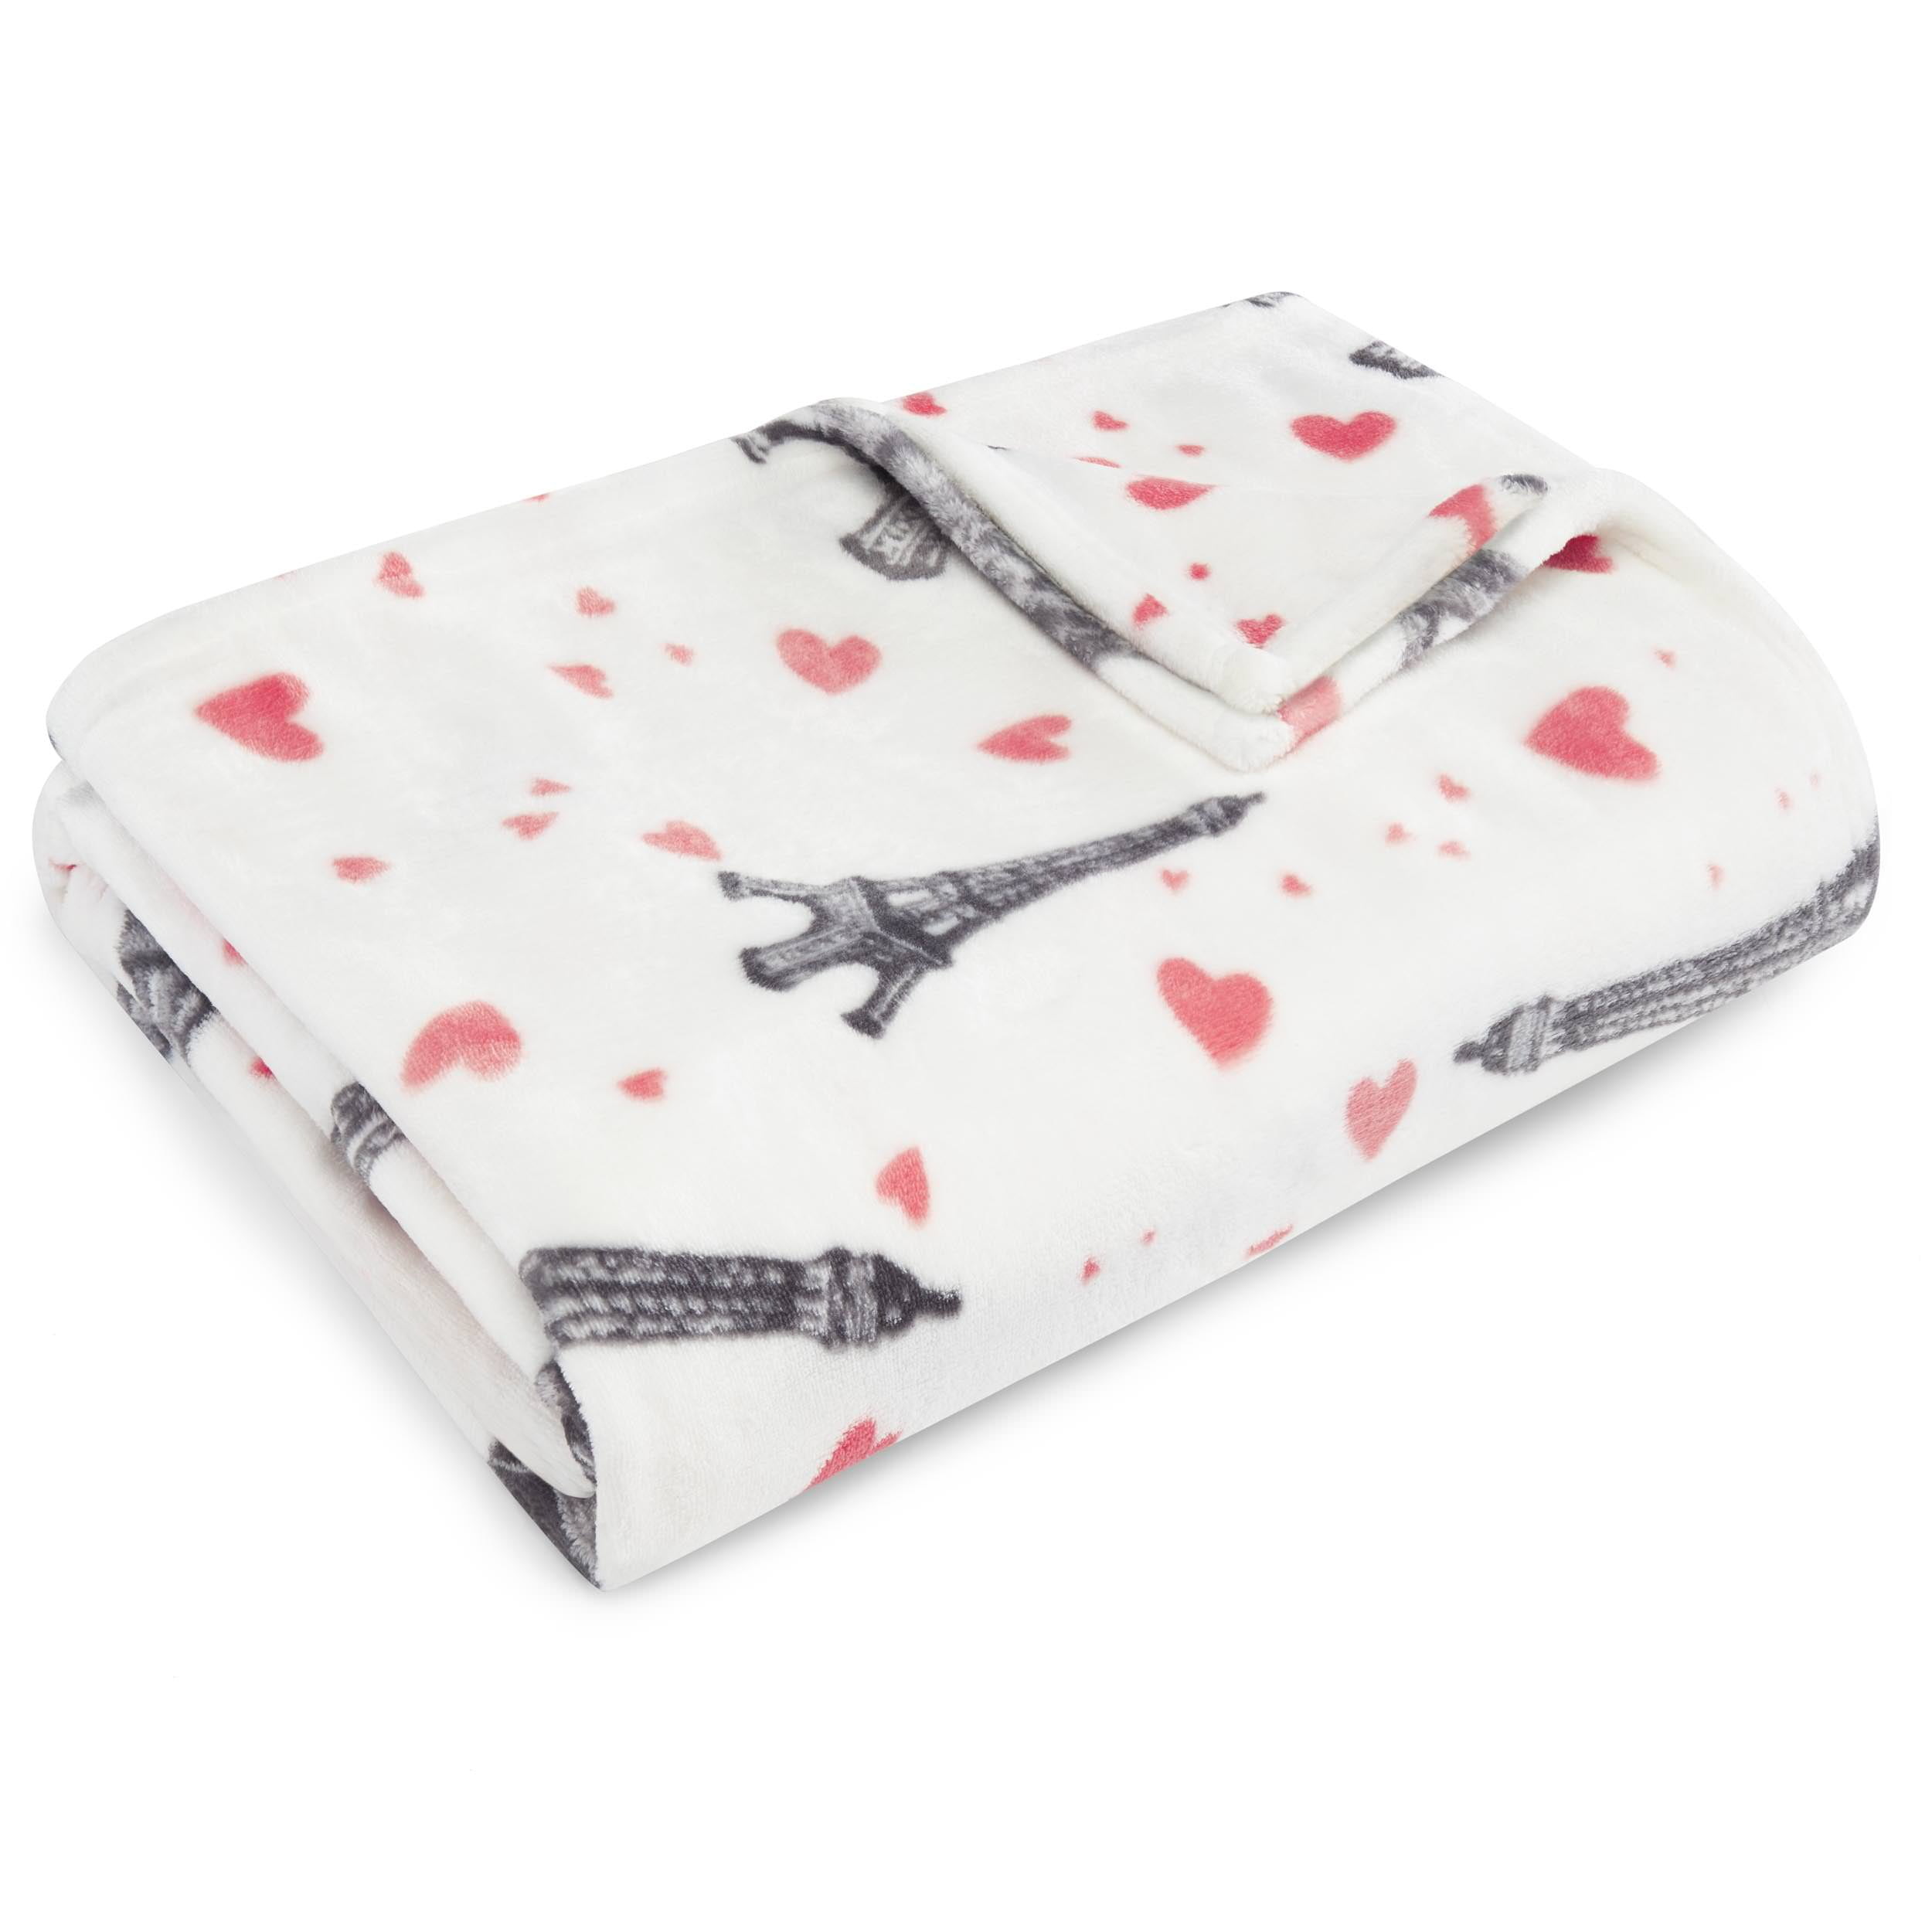 lovemyfabric 58X70 Super Soft Leopard Stripes Print Fleece Light Weight Blanket Couch/Sofa/Travel Throw-Hot Pink